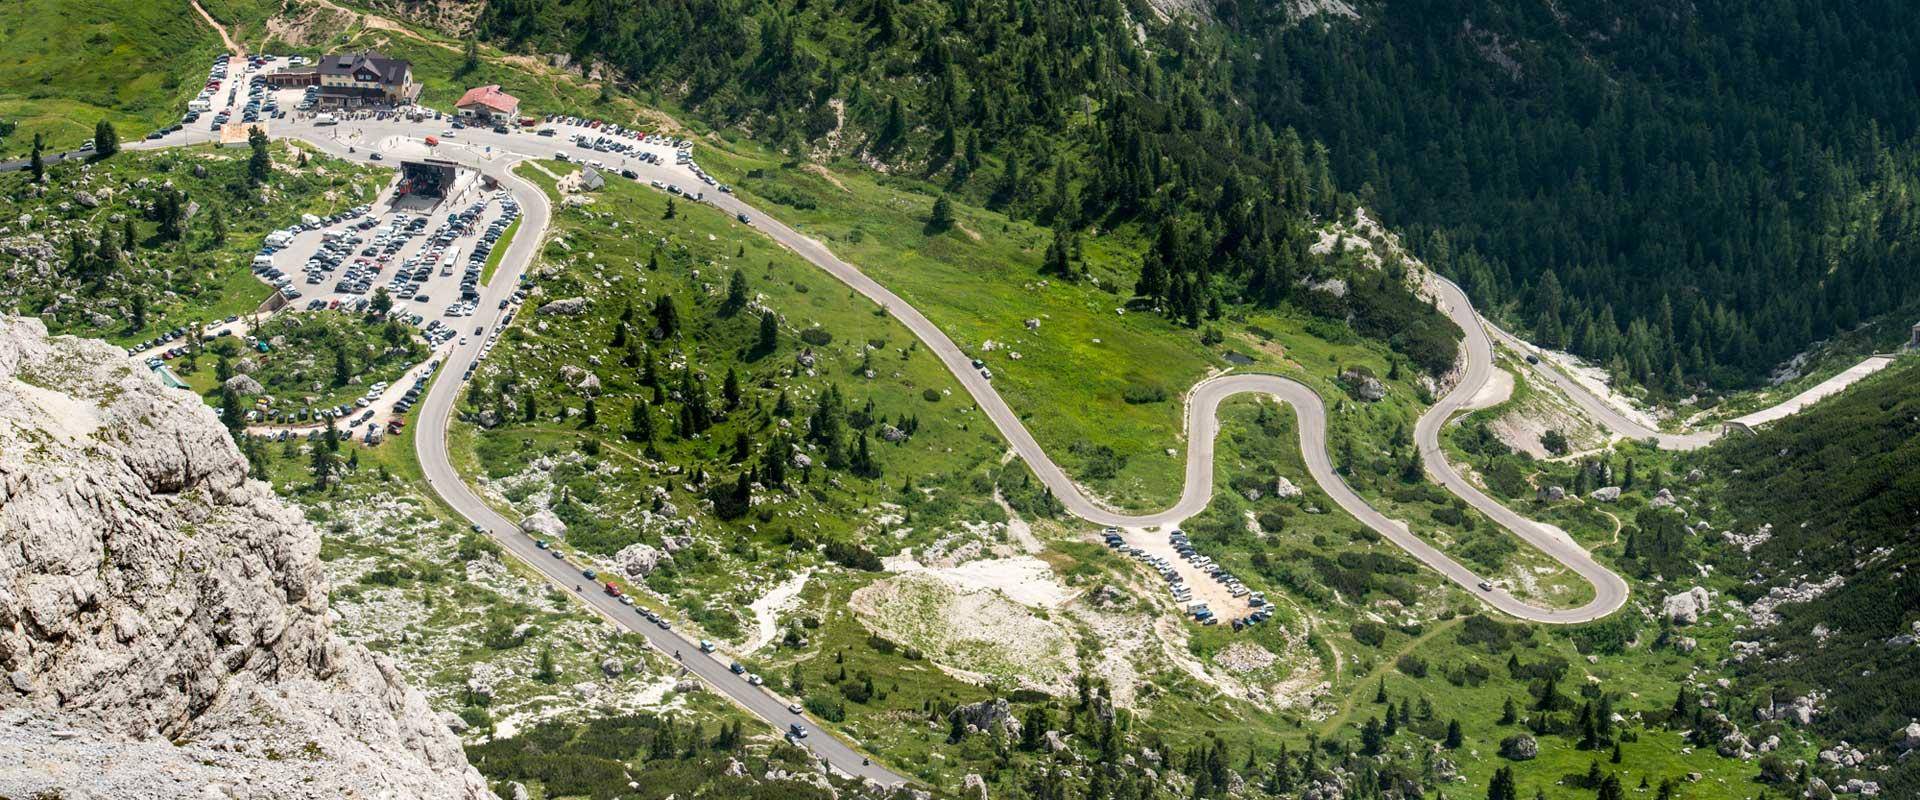 Dolomites road